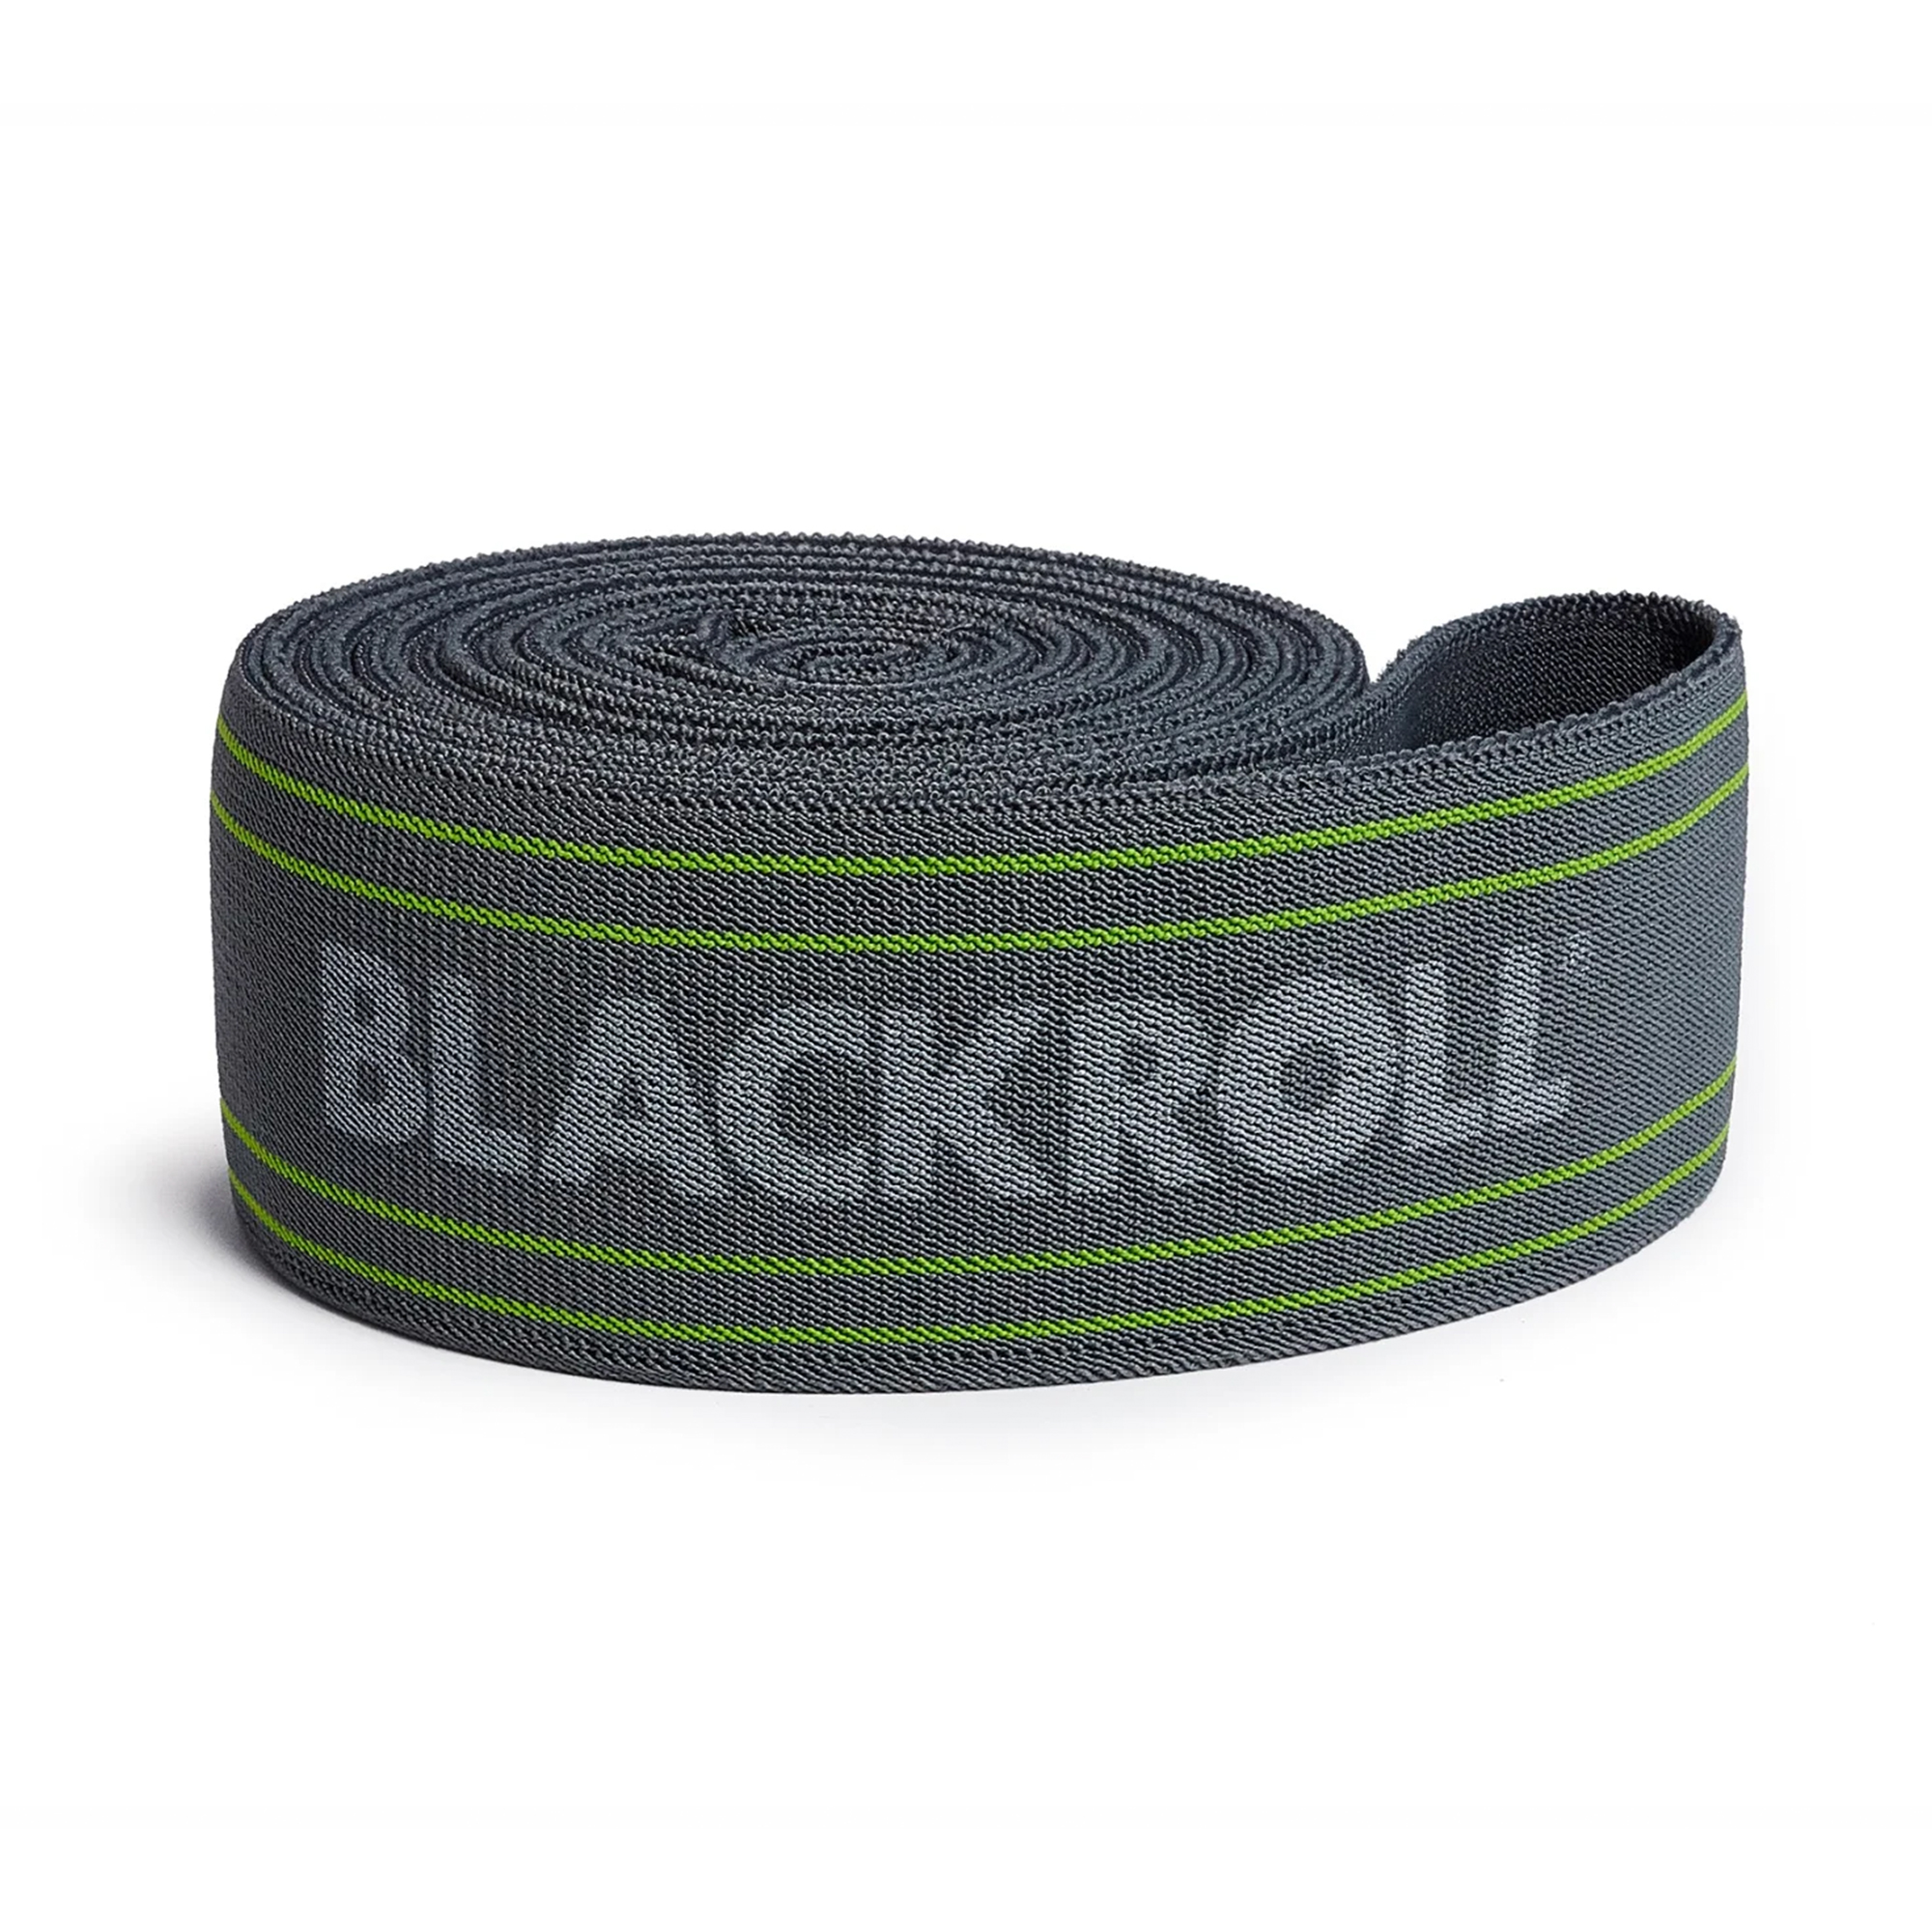 Blackroll Resist Band Træningselastik - Strong (190 cm x 6 cm)